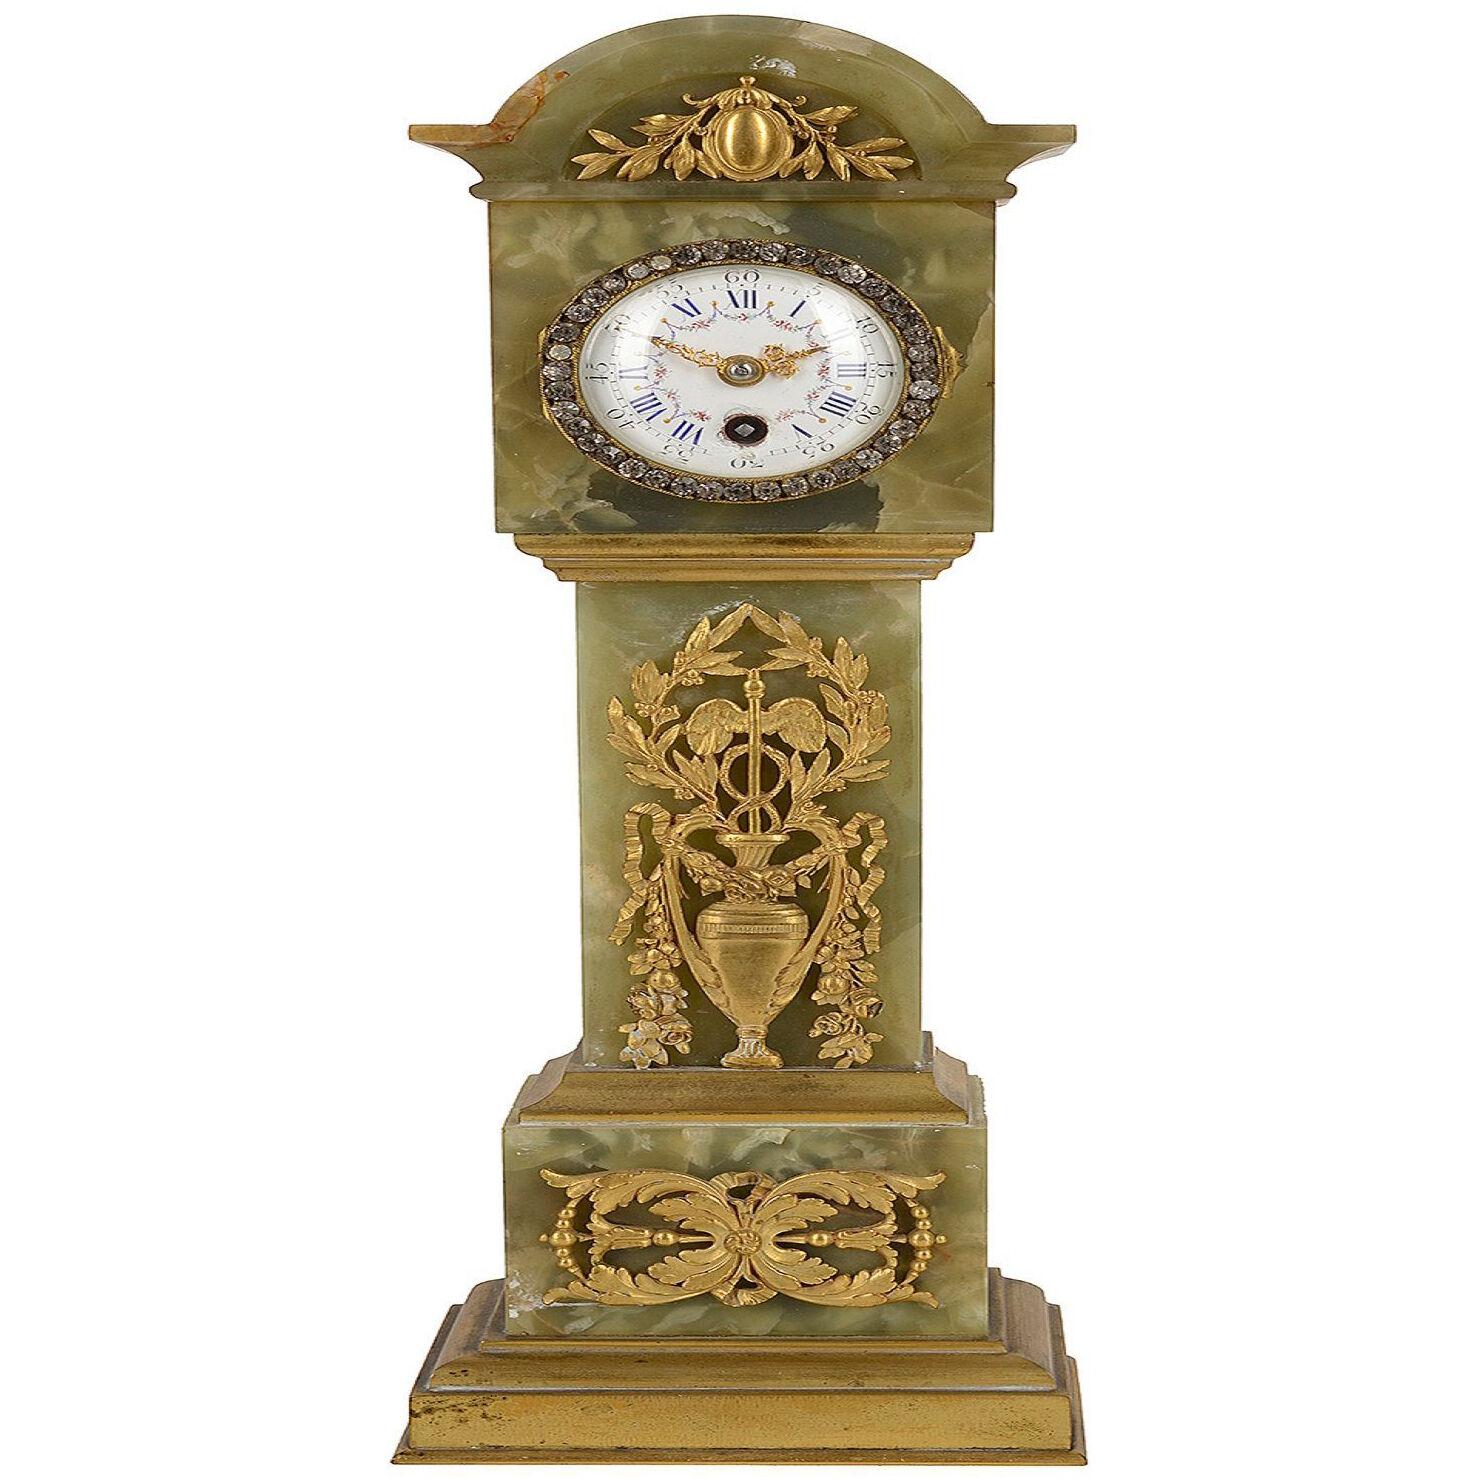 Minature Onyx + Ormolu table/mantel clock. late 19th Century.